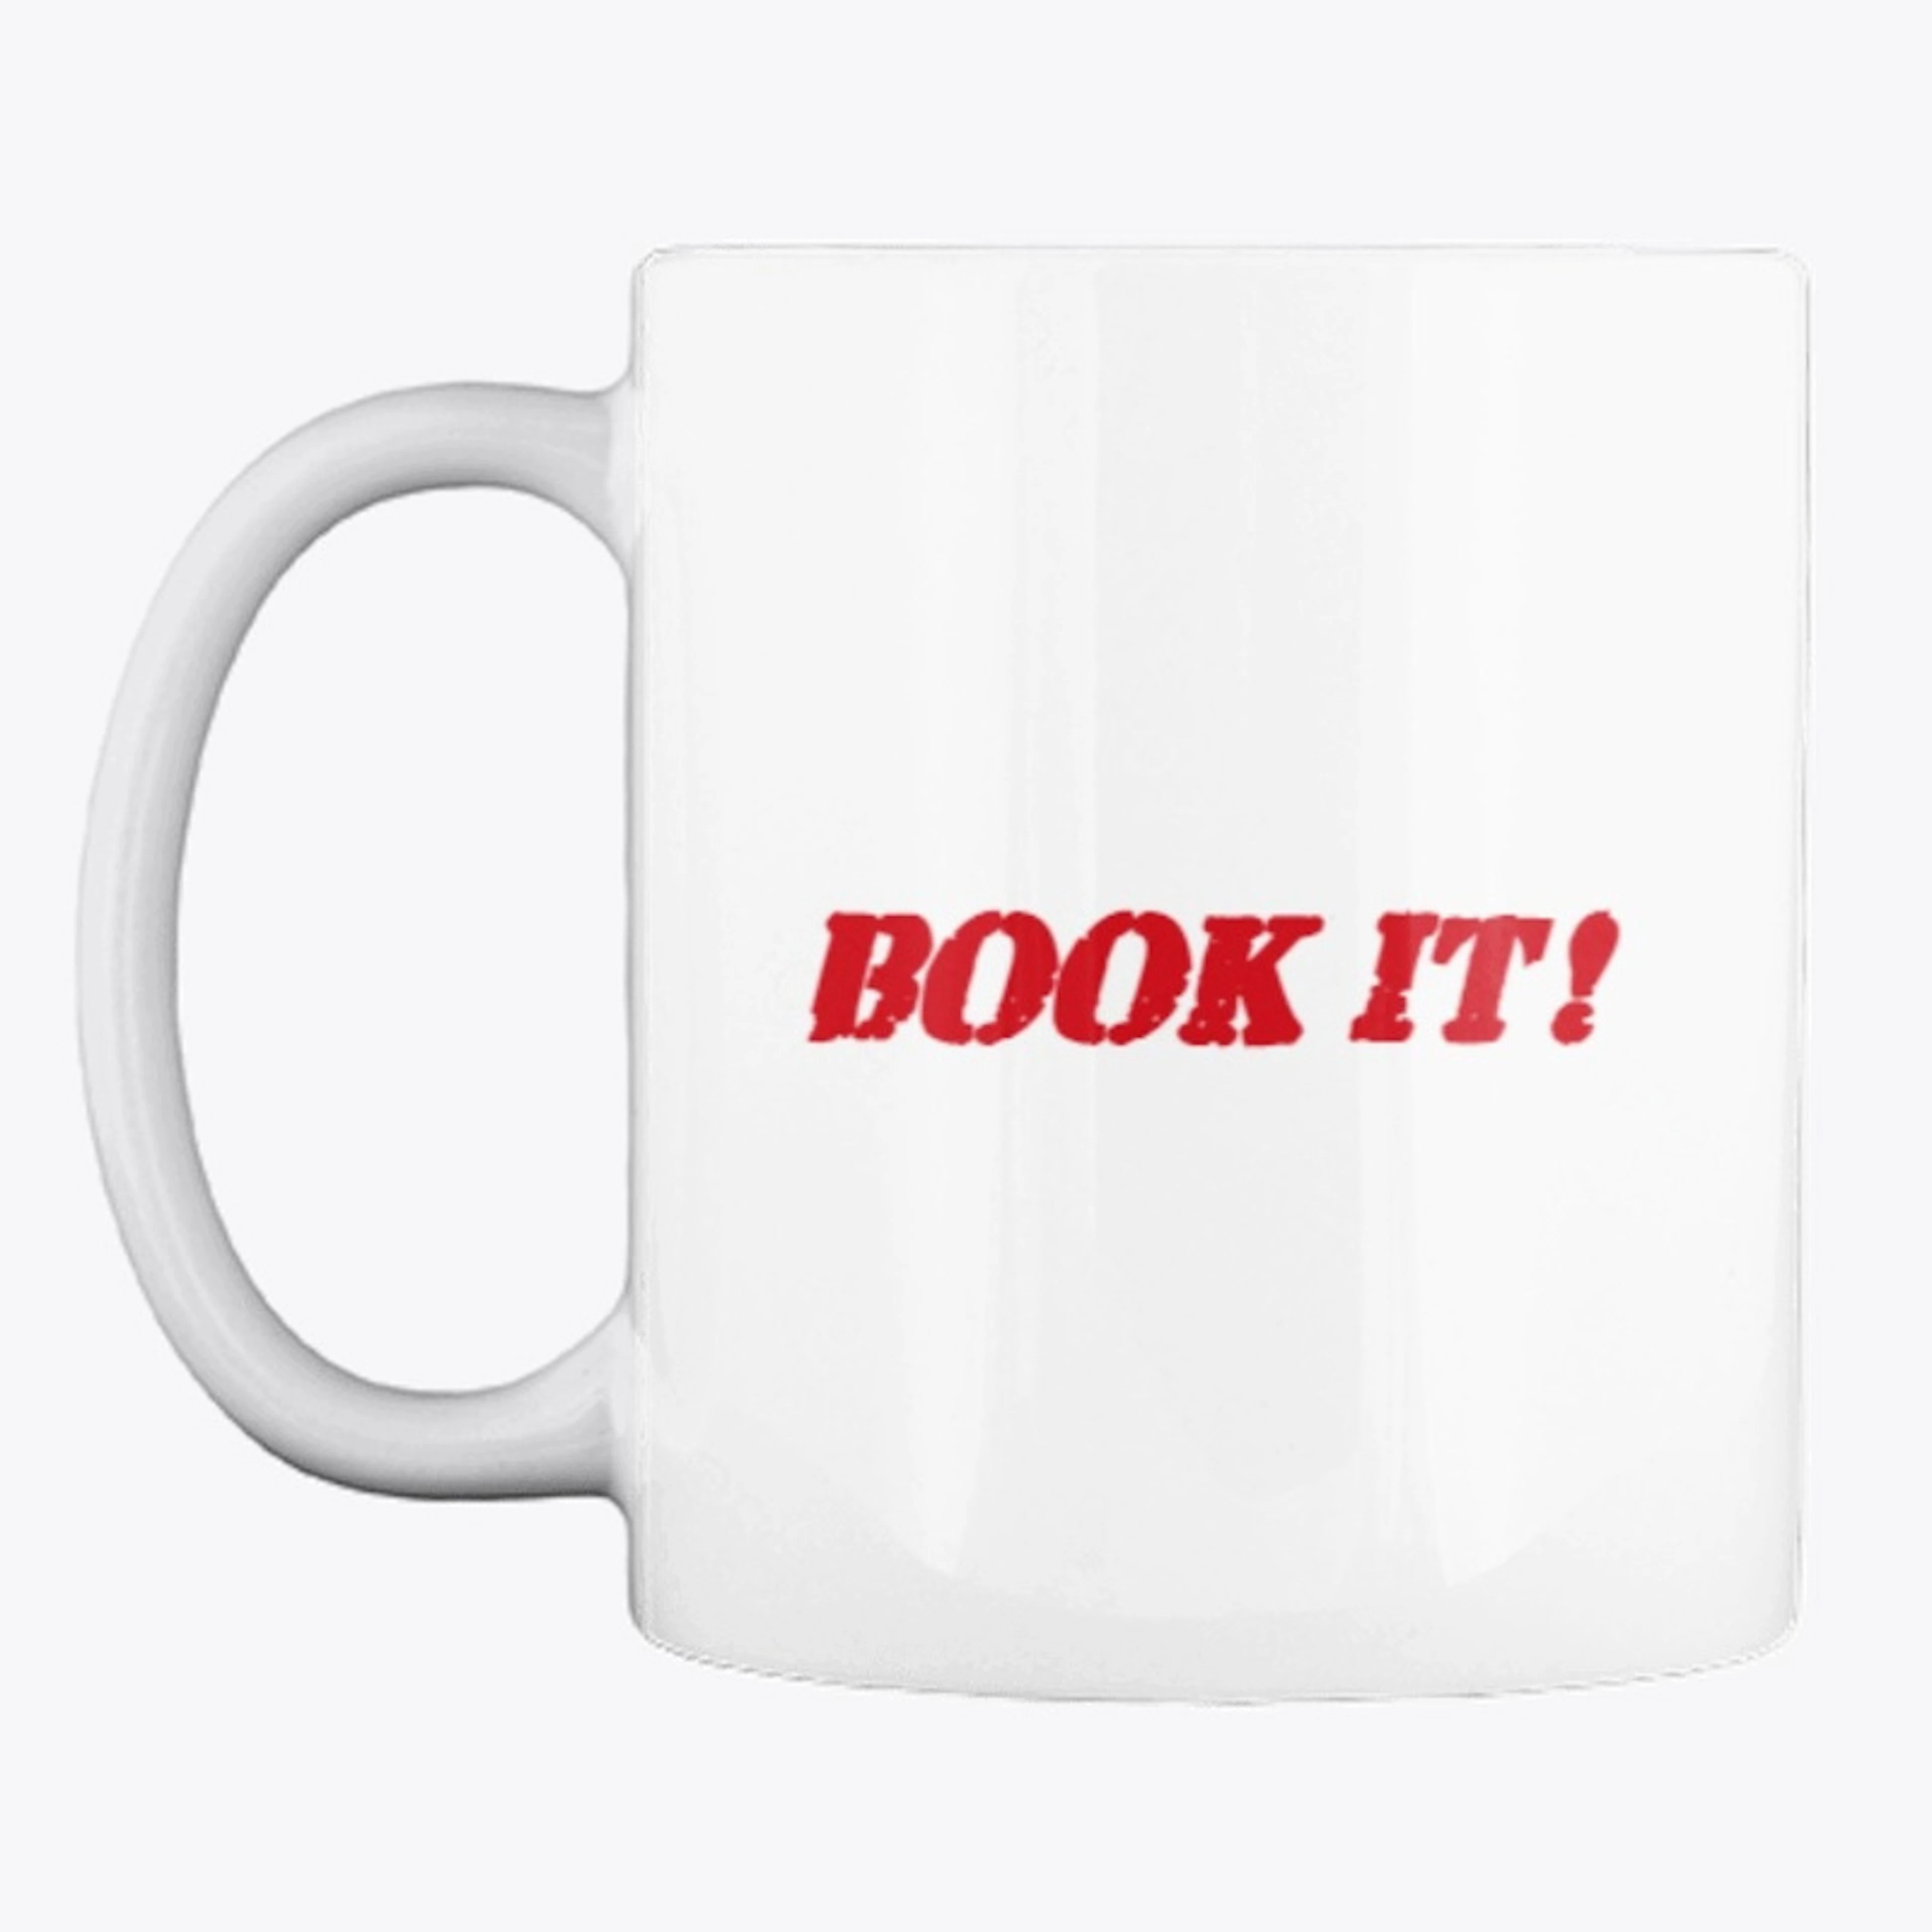 BOOK IT! Mug